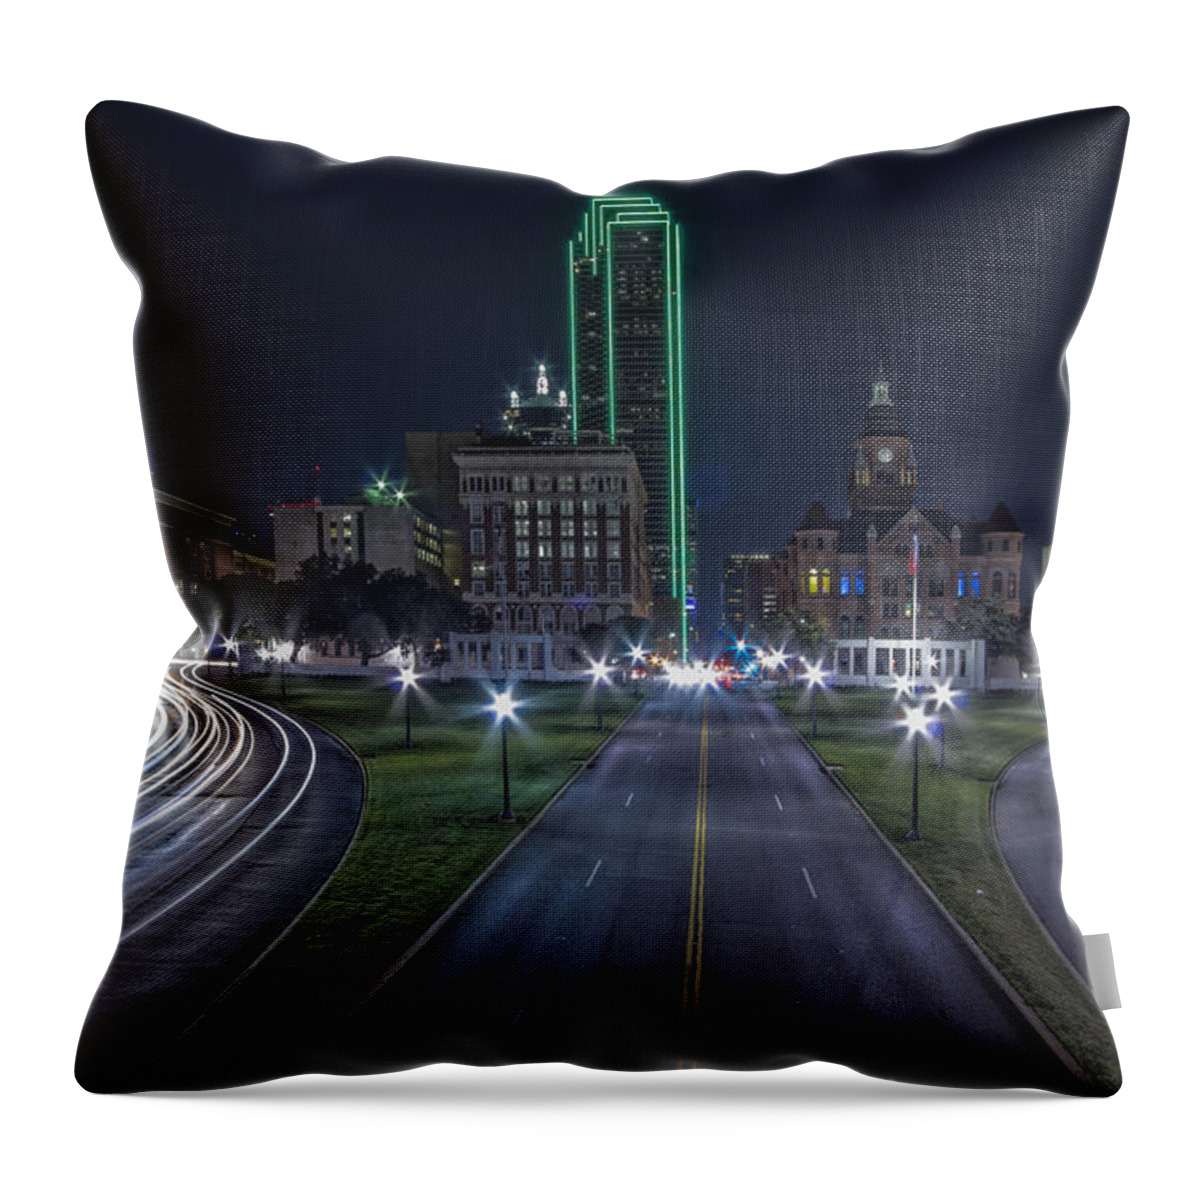 Dallas Texas Throw Pillow featuring the photograph Dealy Plaza - Dallas Skline At Night by Jonathan Davison